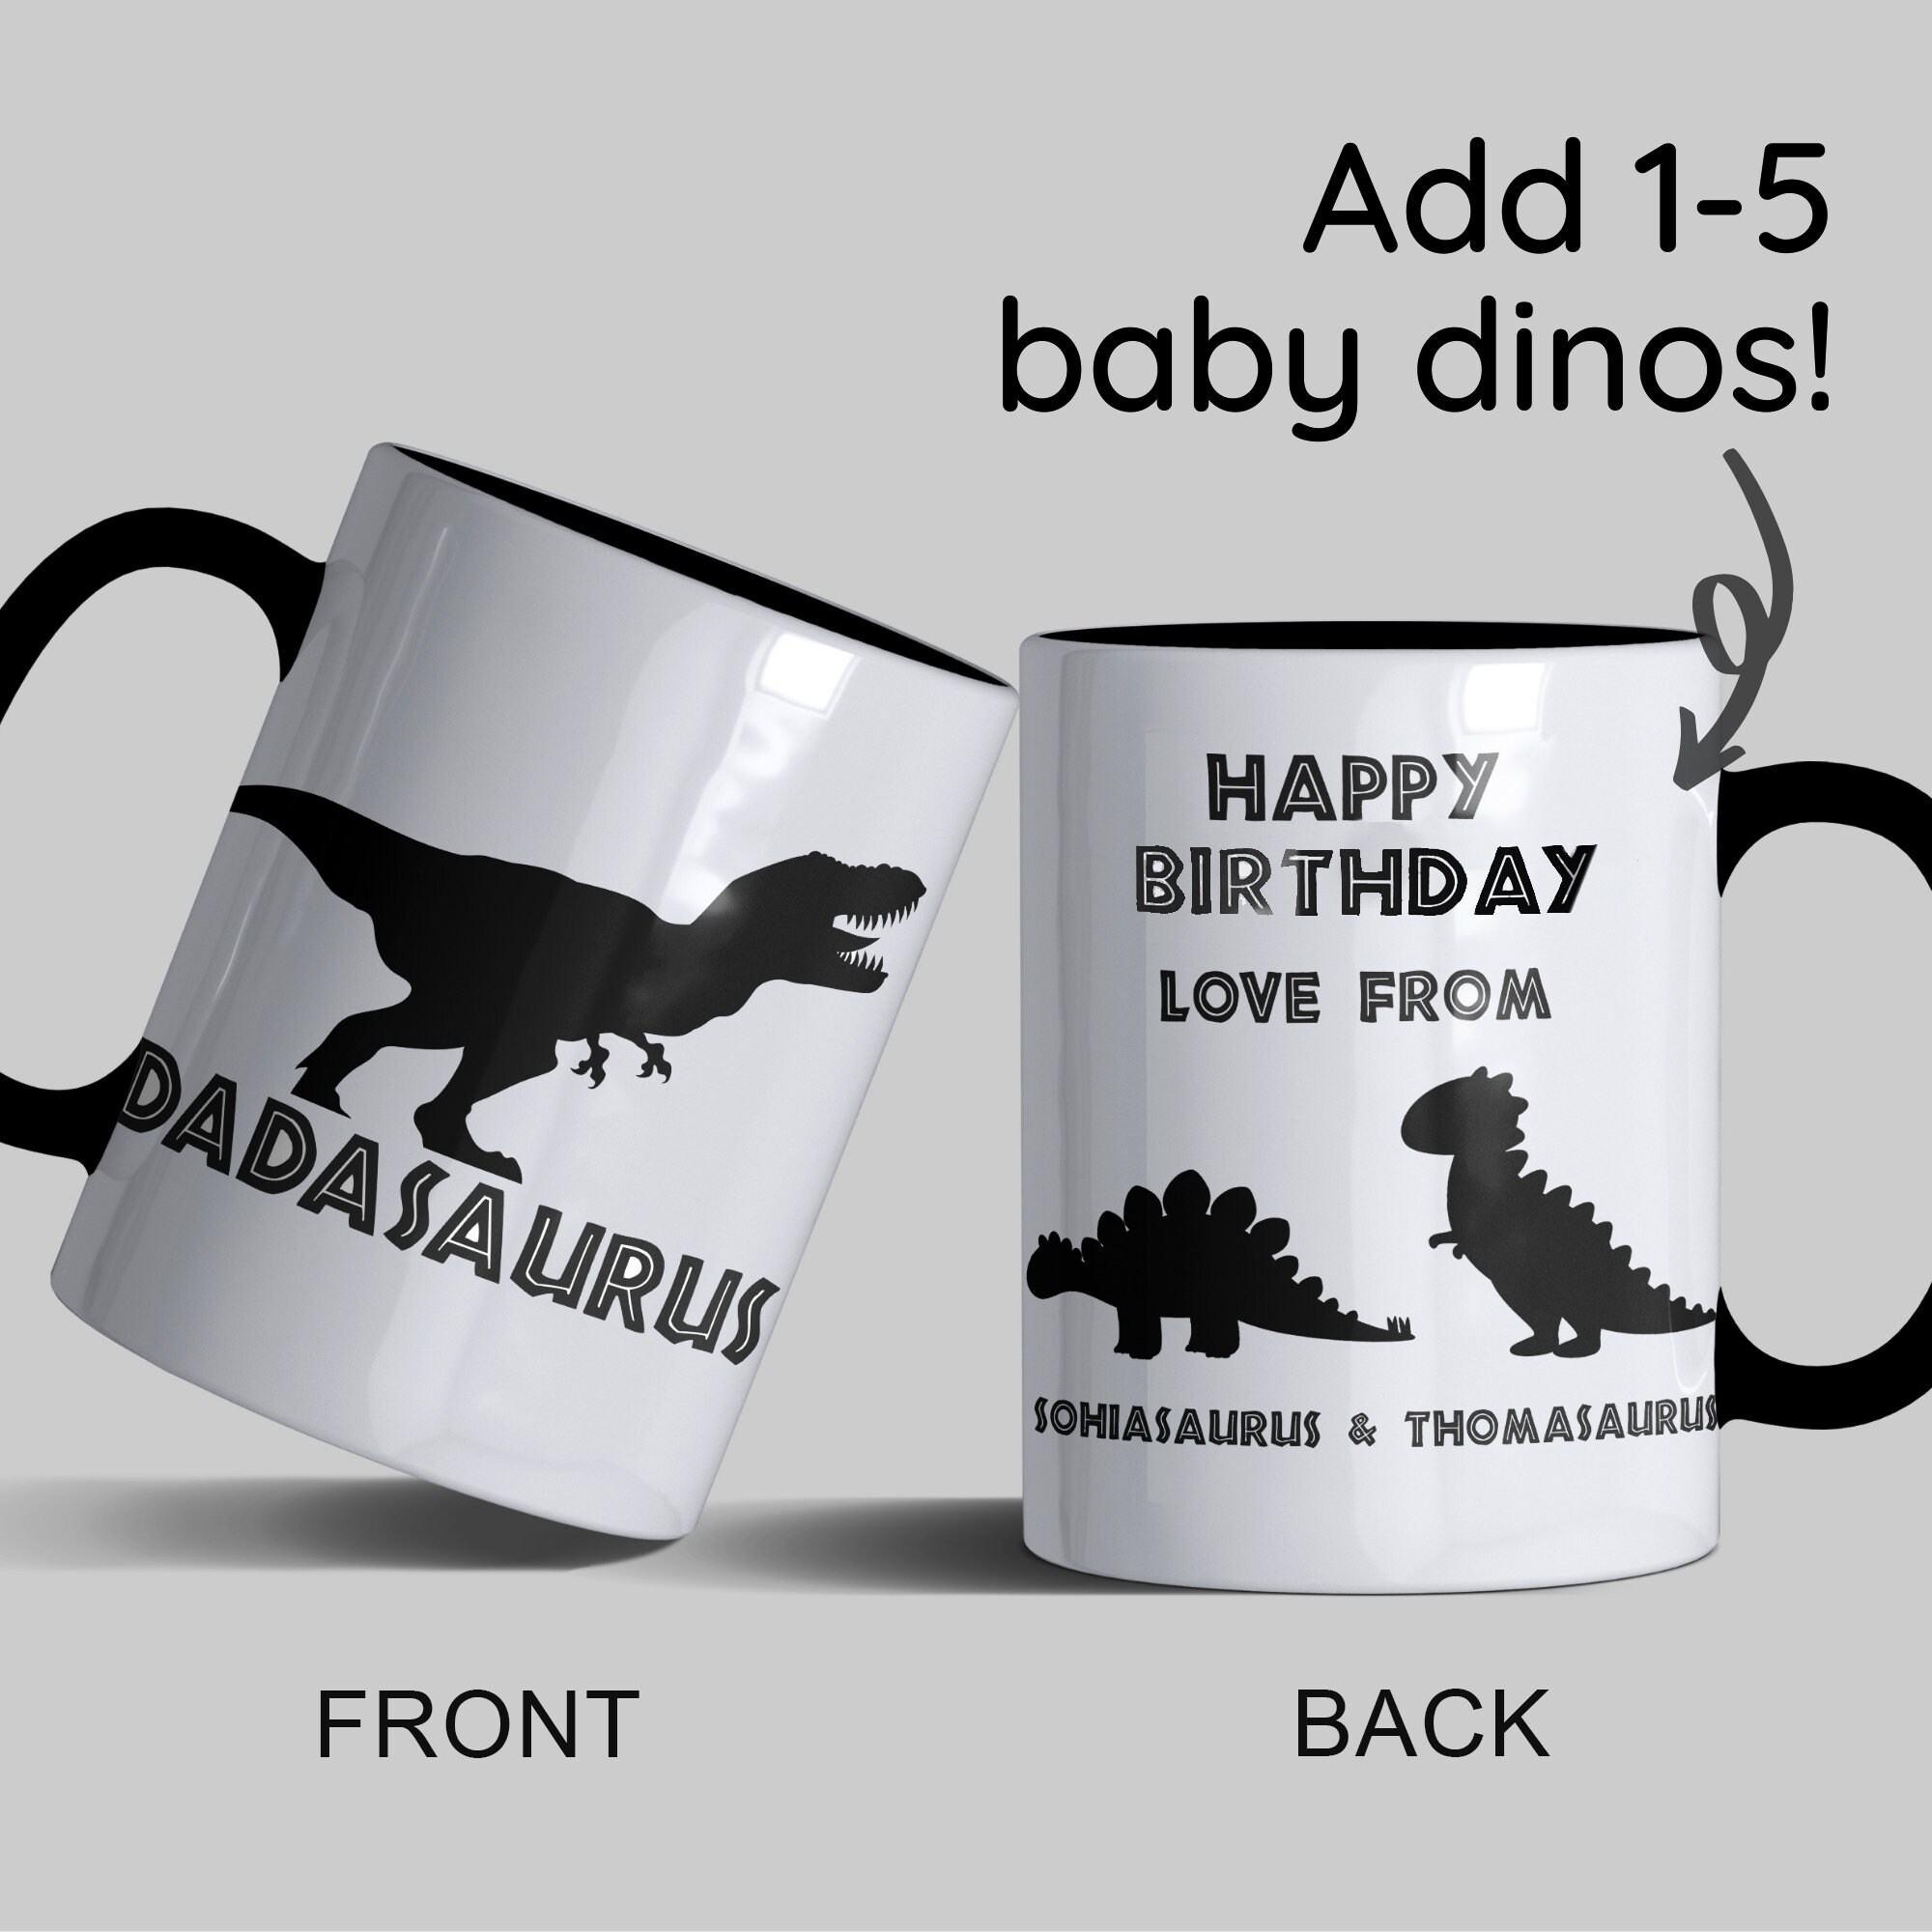 Personalized Dadasaurus, Father's Day Mug, Dad Mug, Dad Birthday